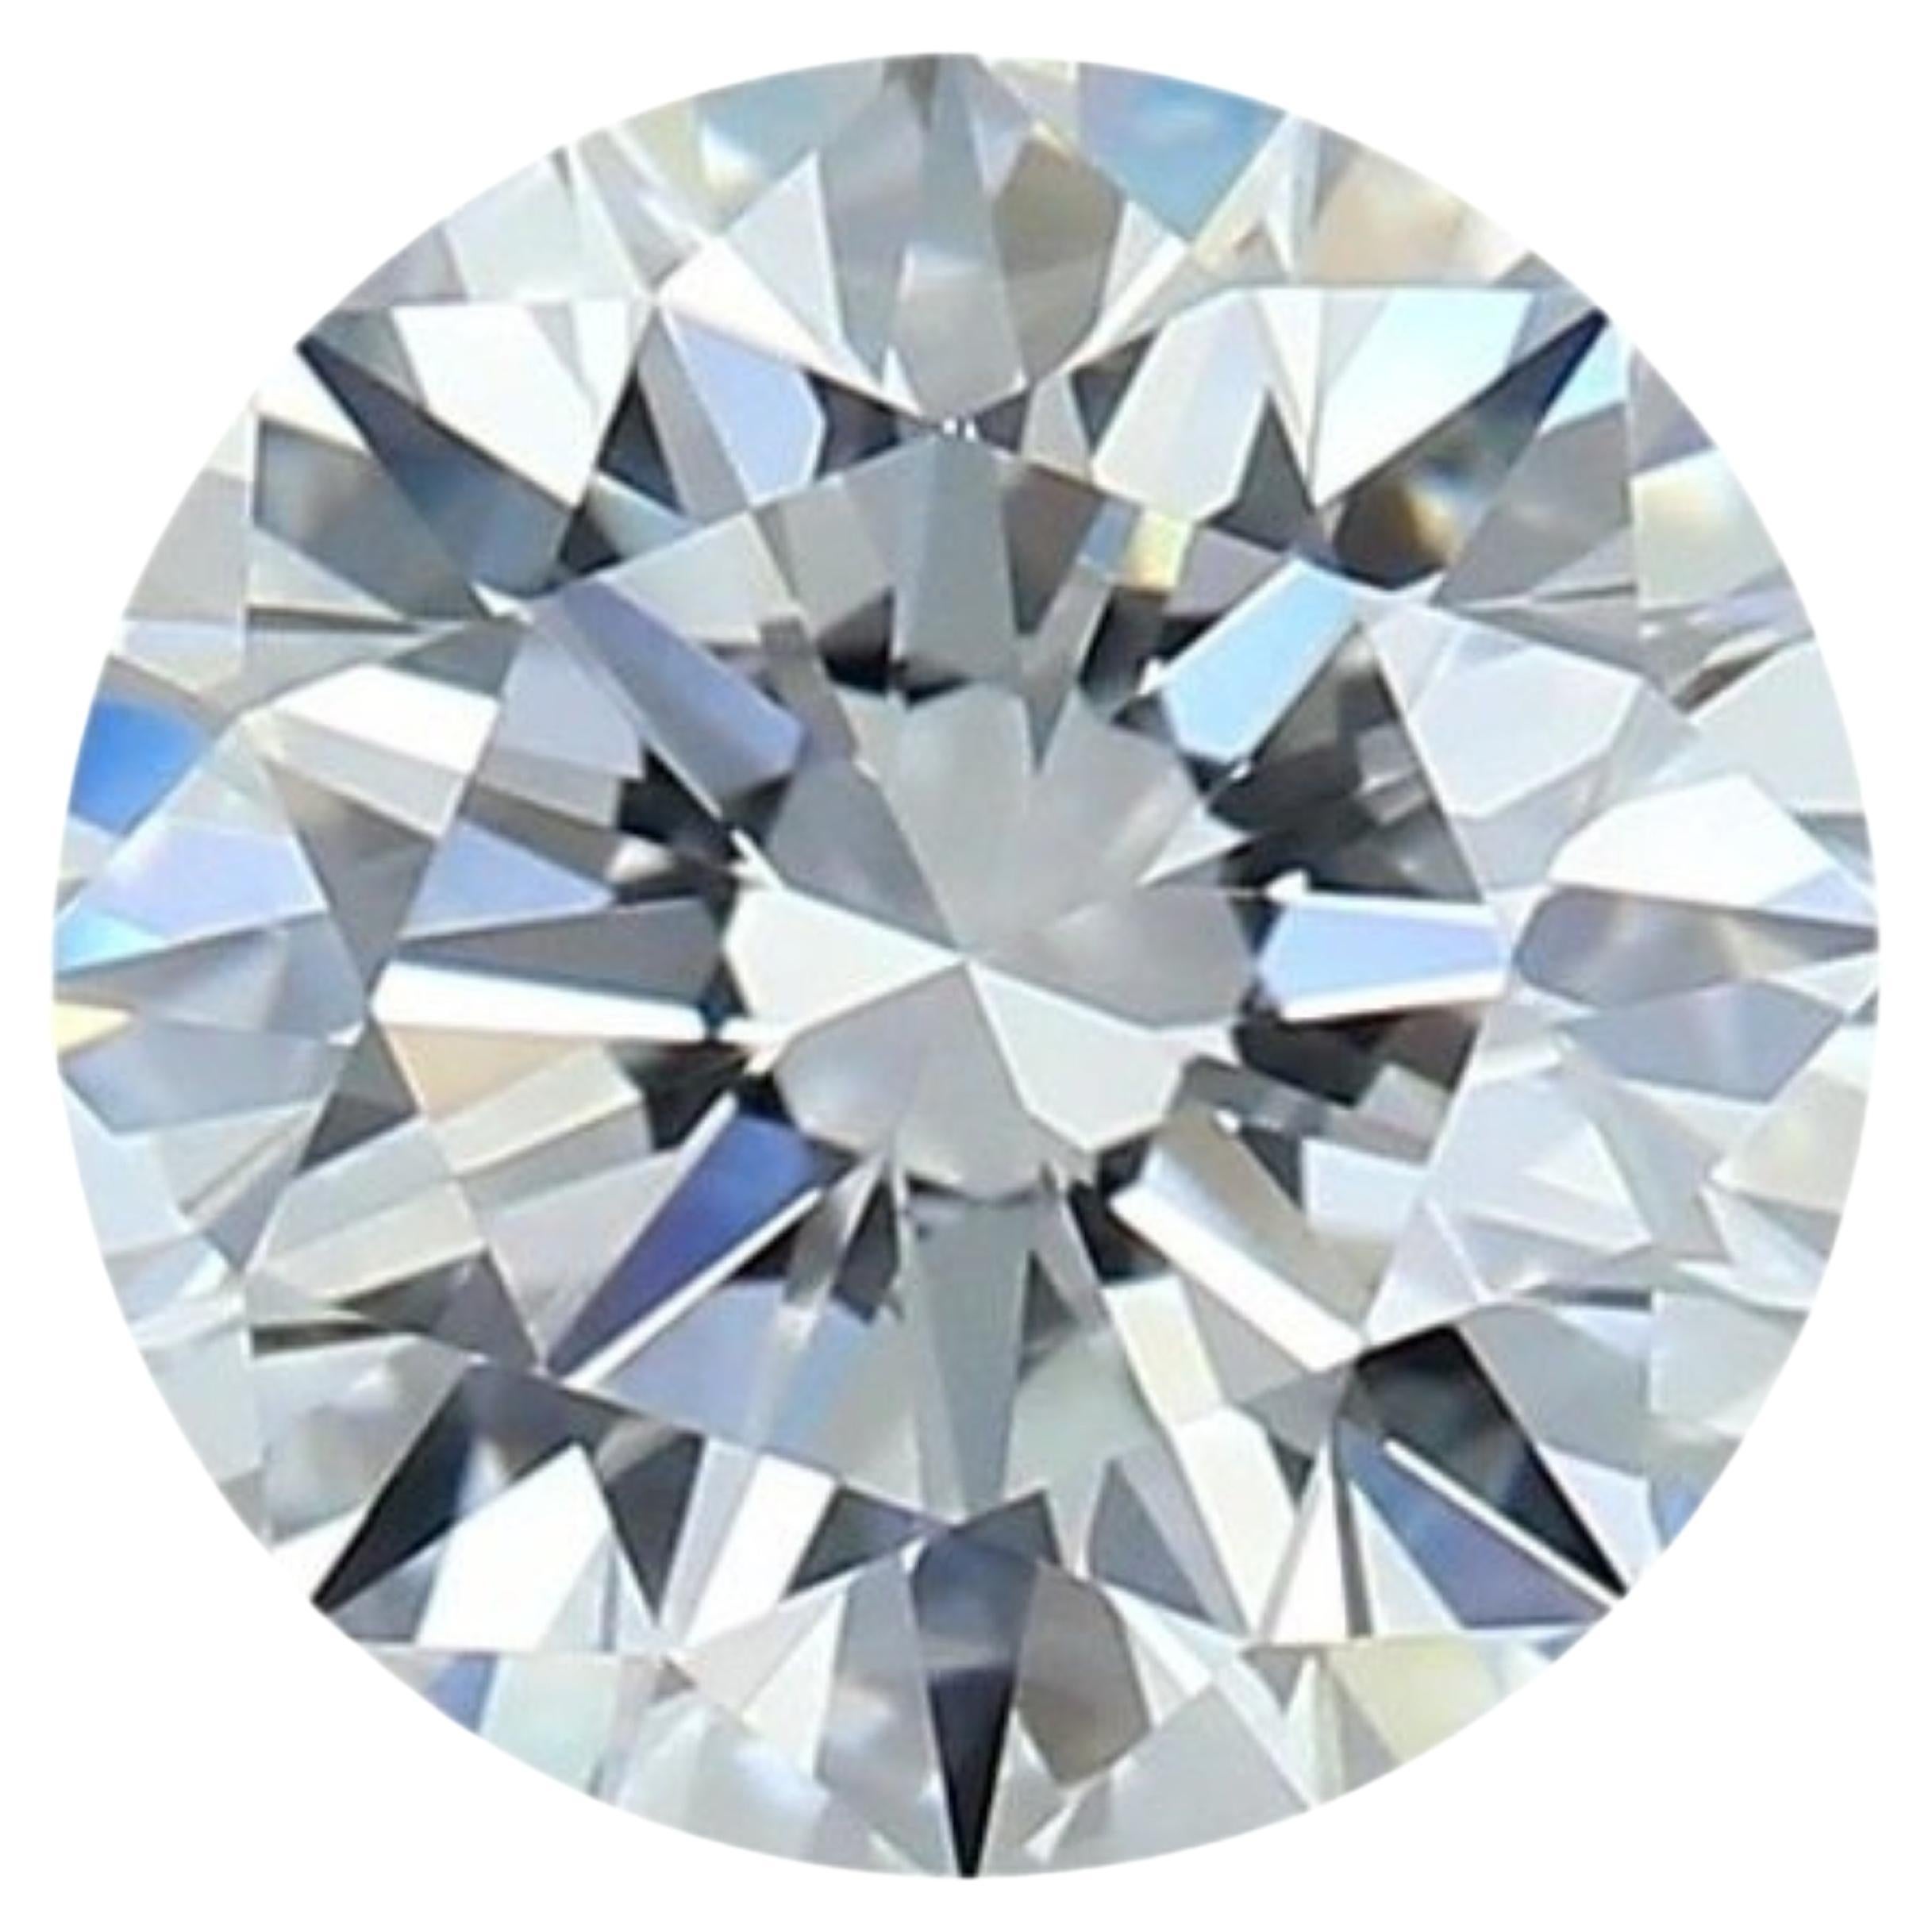 Shiny 0.92 carat natural cut round brilliant diamond For Sale